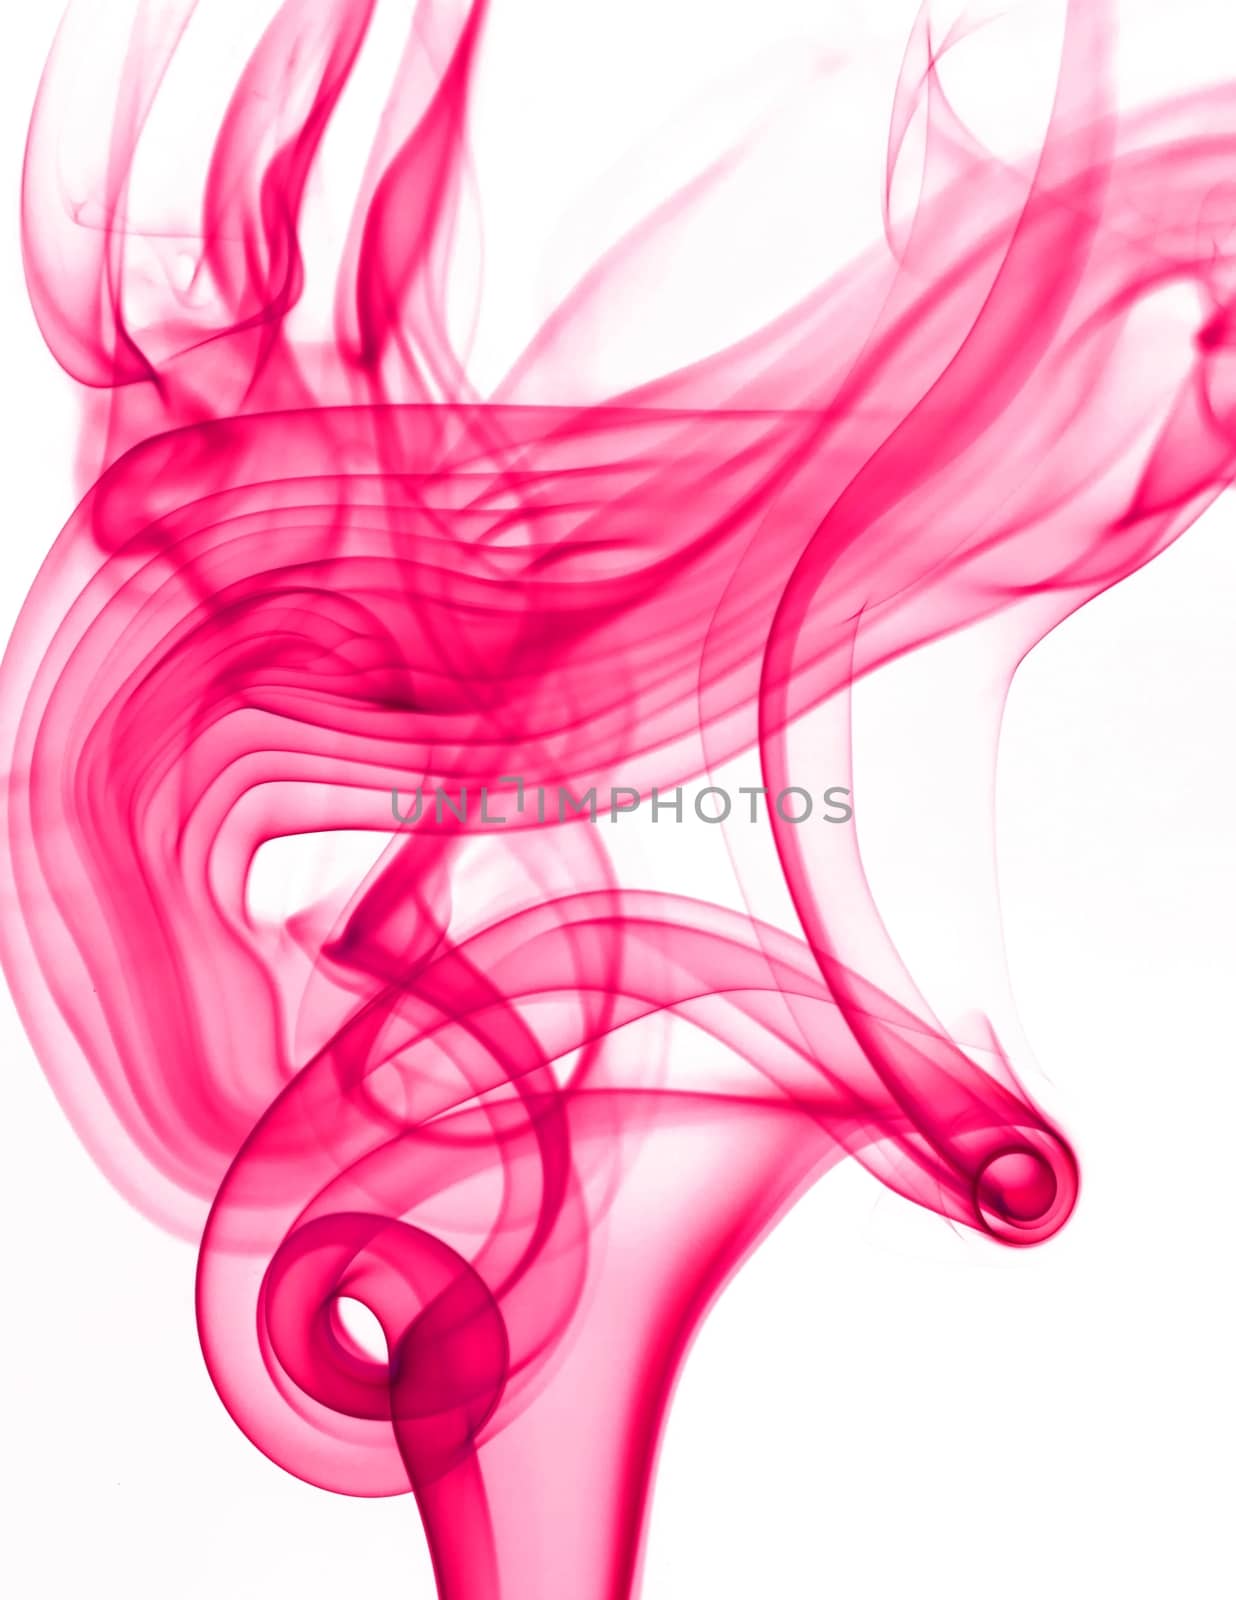 Pink smoke by hamik